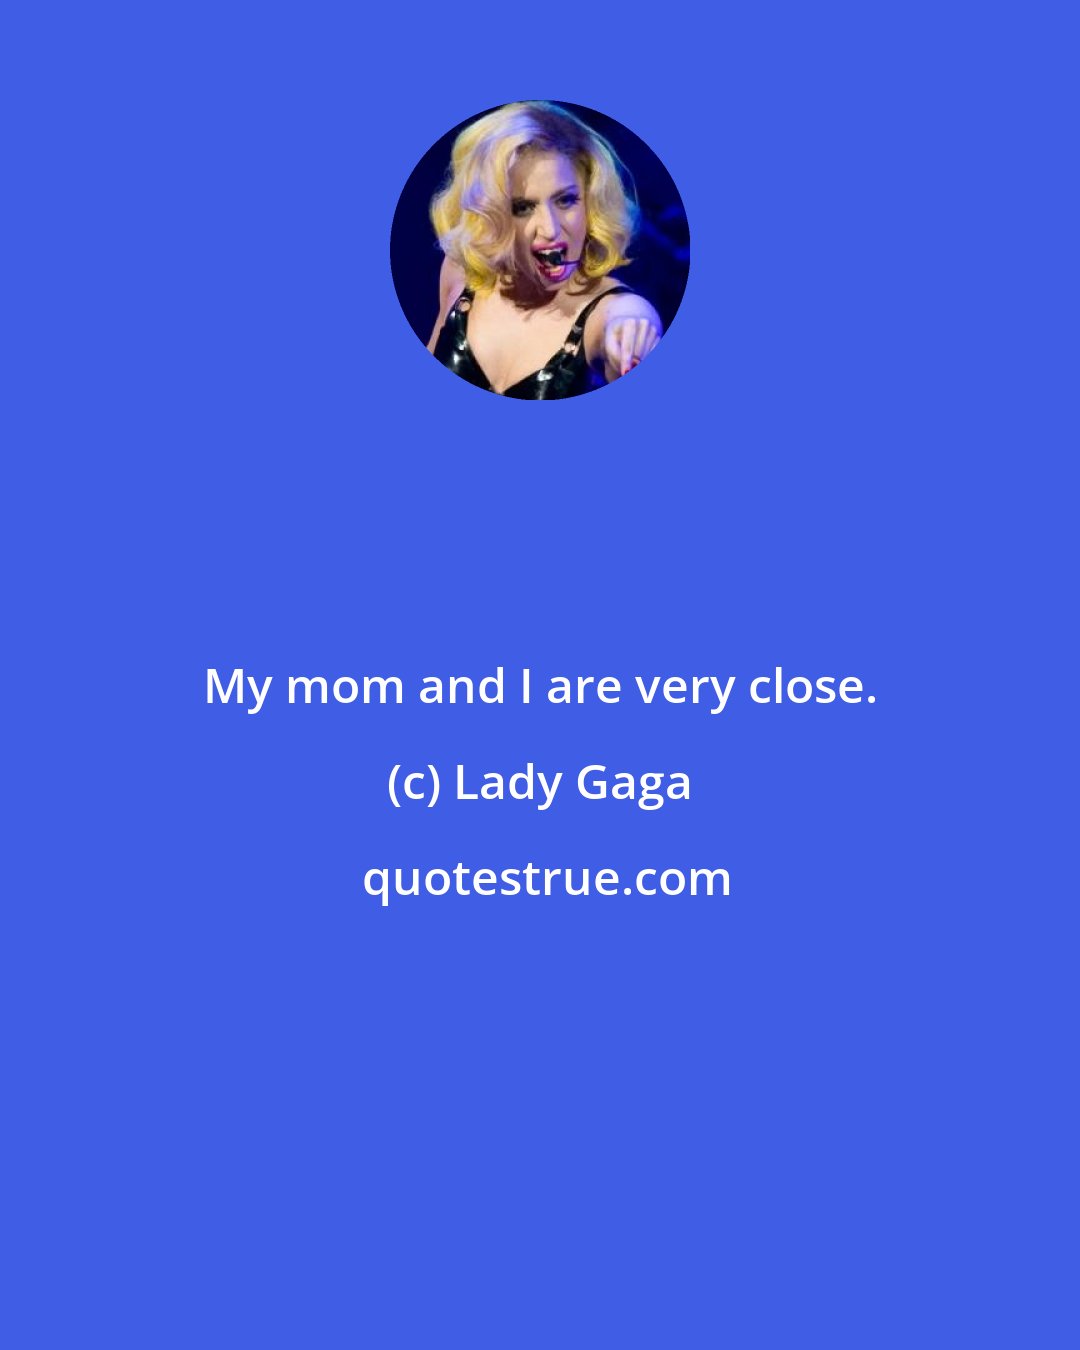 Lady Gaga: My mom and I are very close.